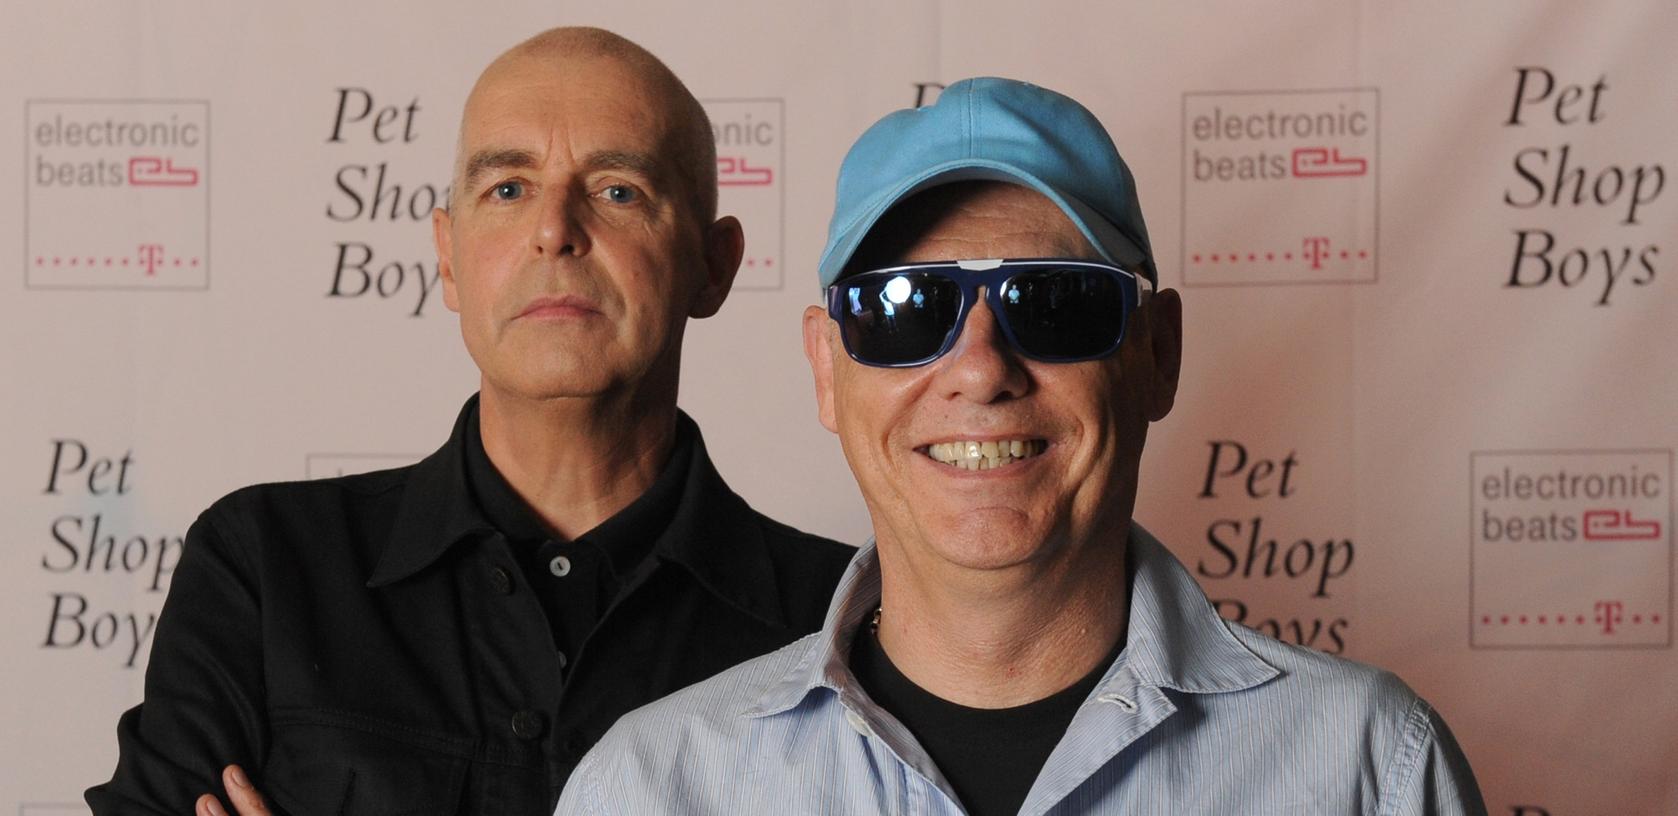 Pet Shop Boys: Wir denken nicht ans Aufhören